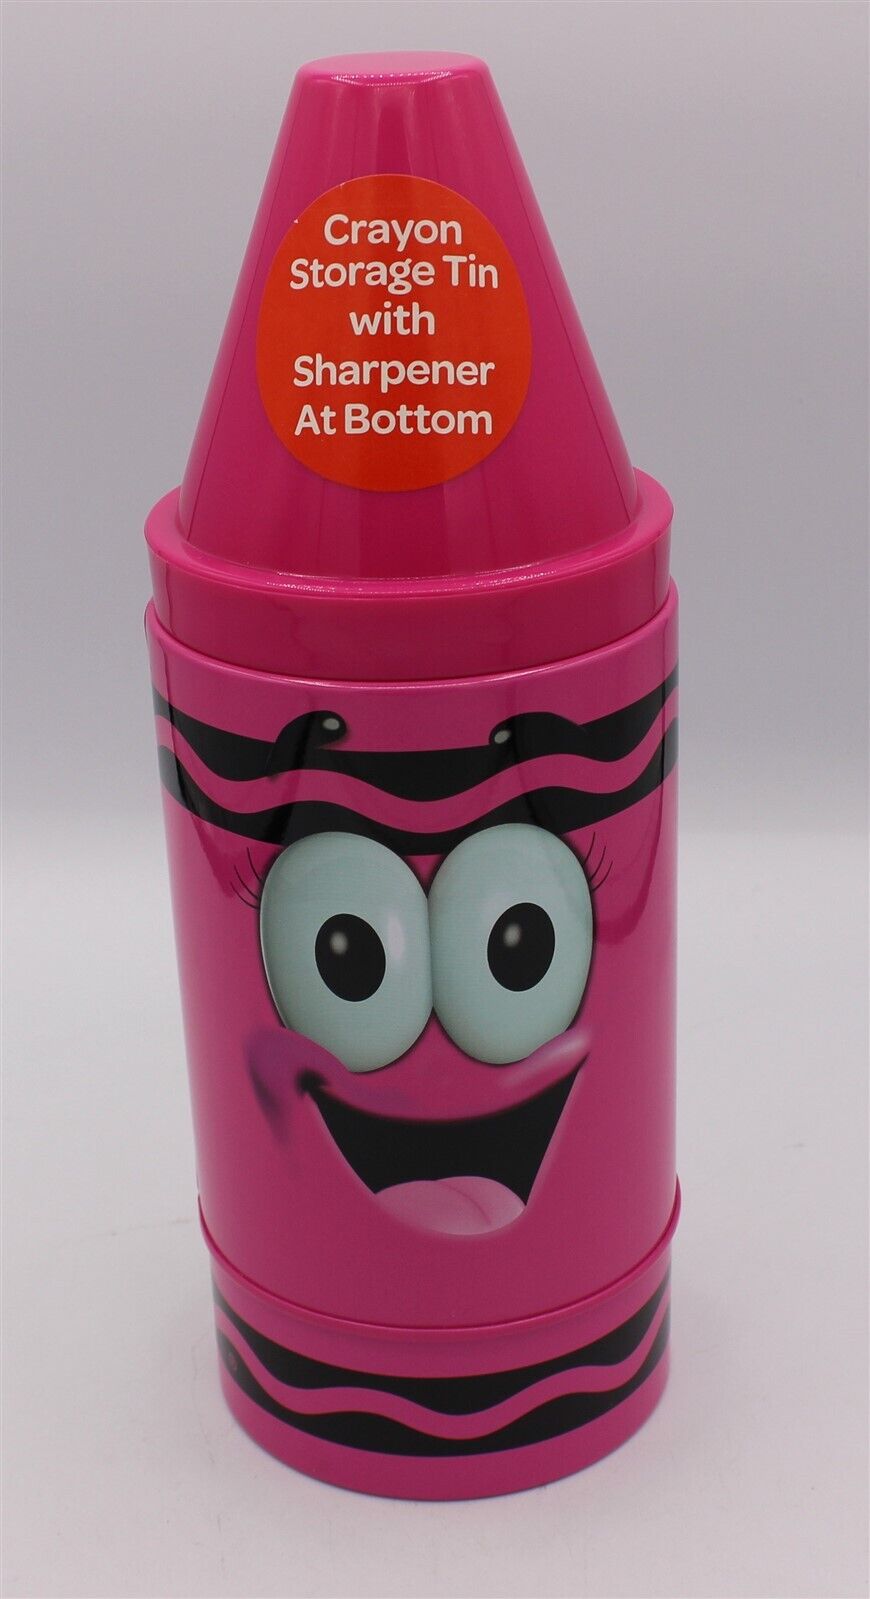 Crayola - Crayon Storage Tin With Sharpener At The Bottom - Pink 